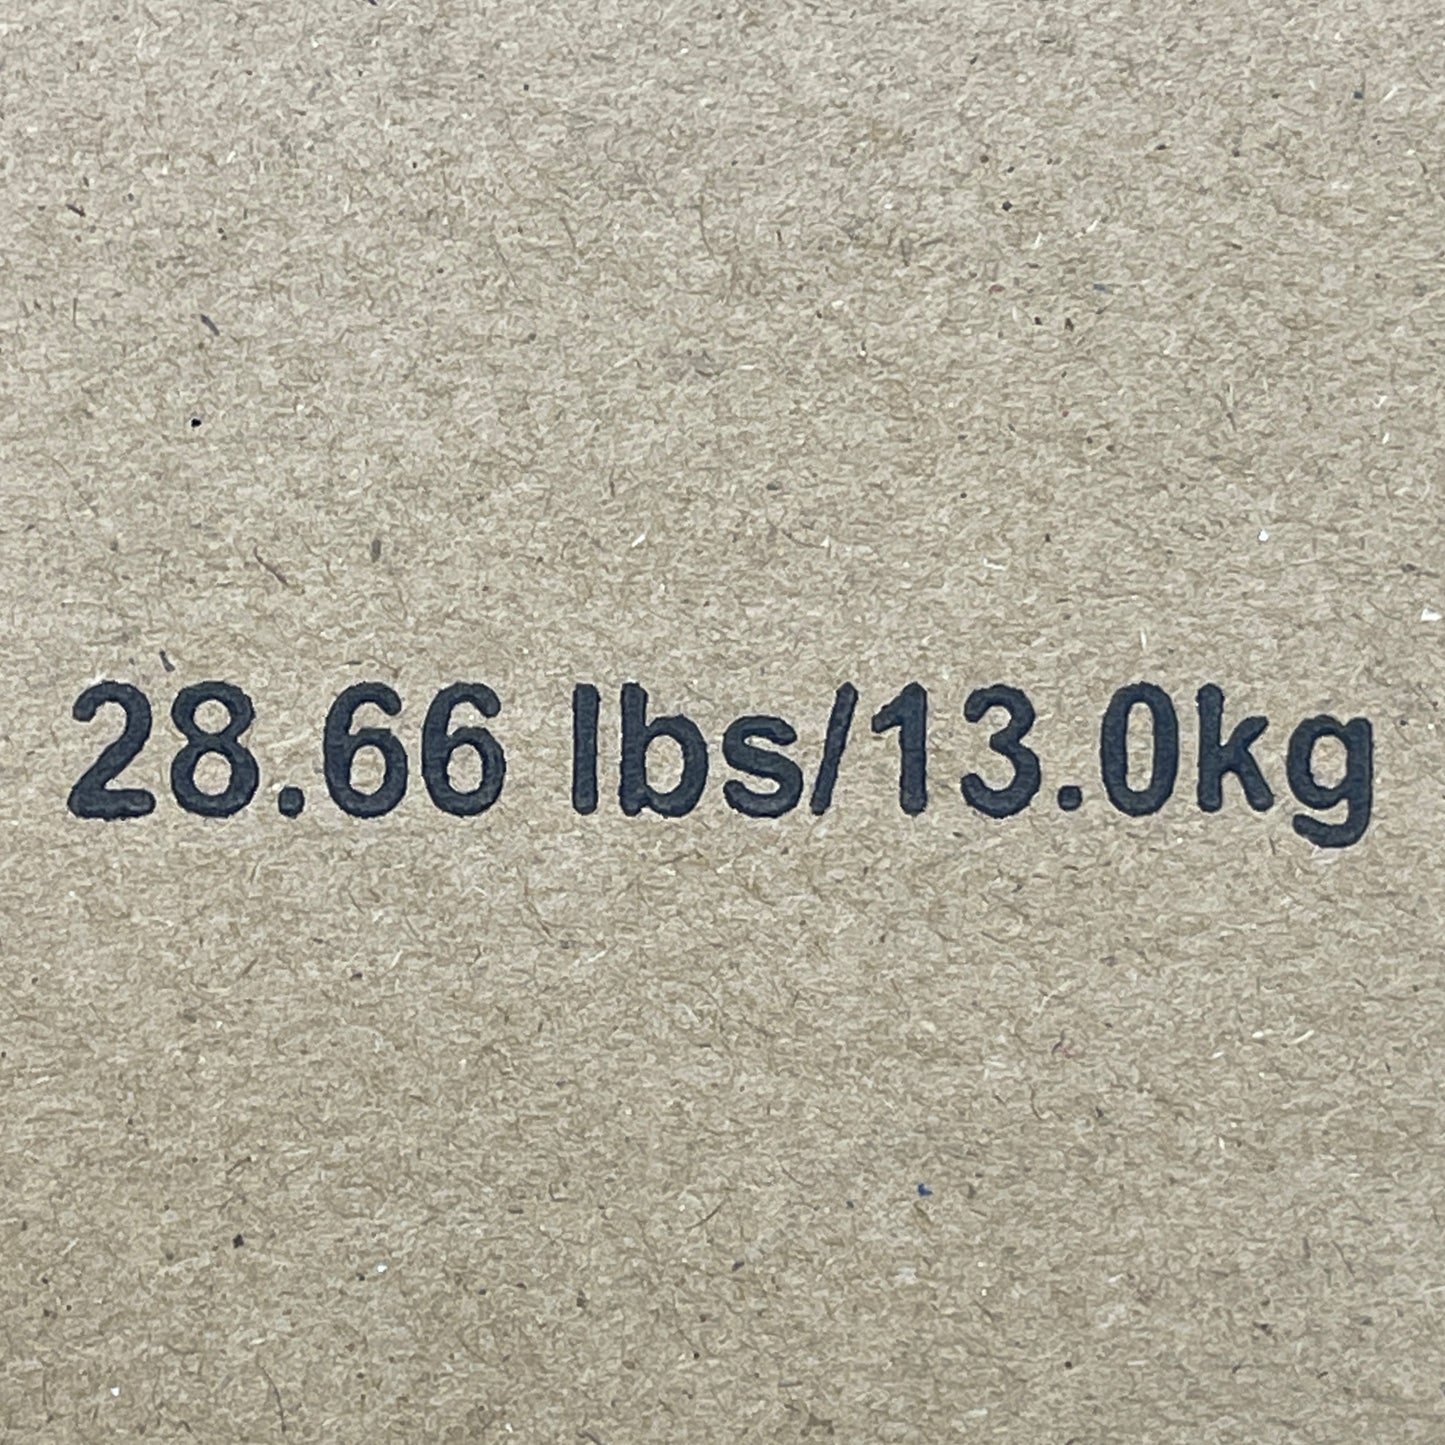 DIAL Box of 500 Deodorant White Marble Bar Soaps 1.5 oz (25.3 LBS) DW00194A